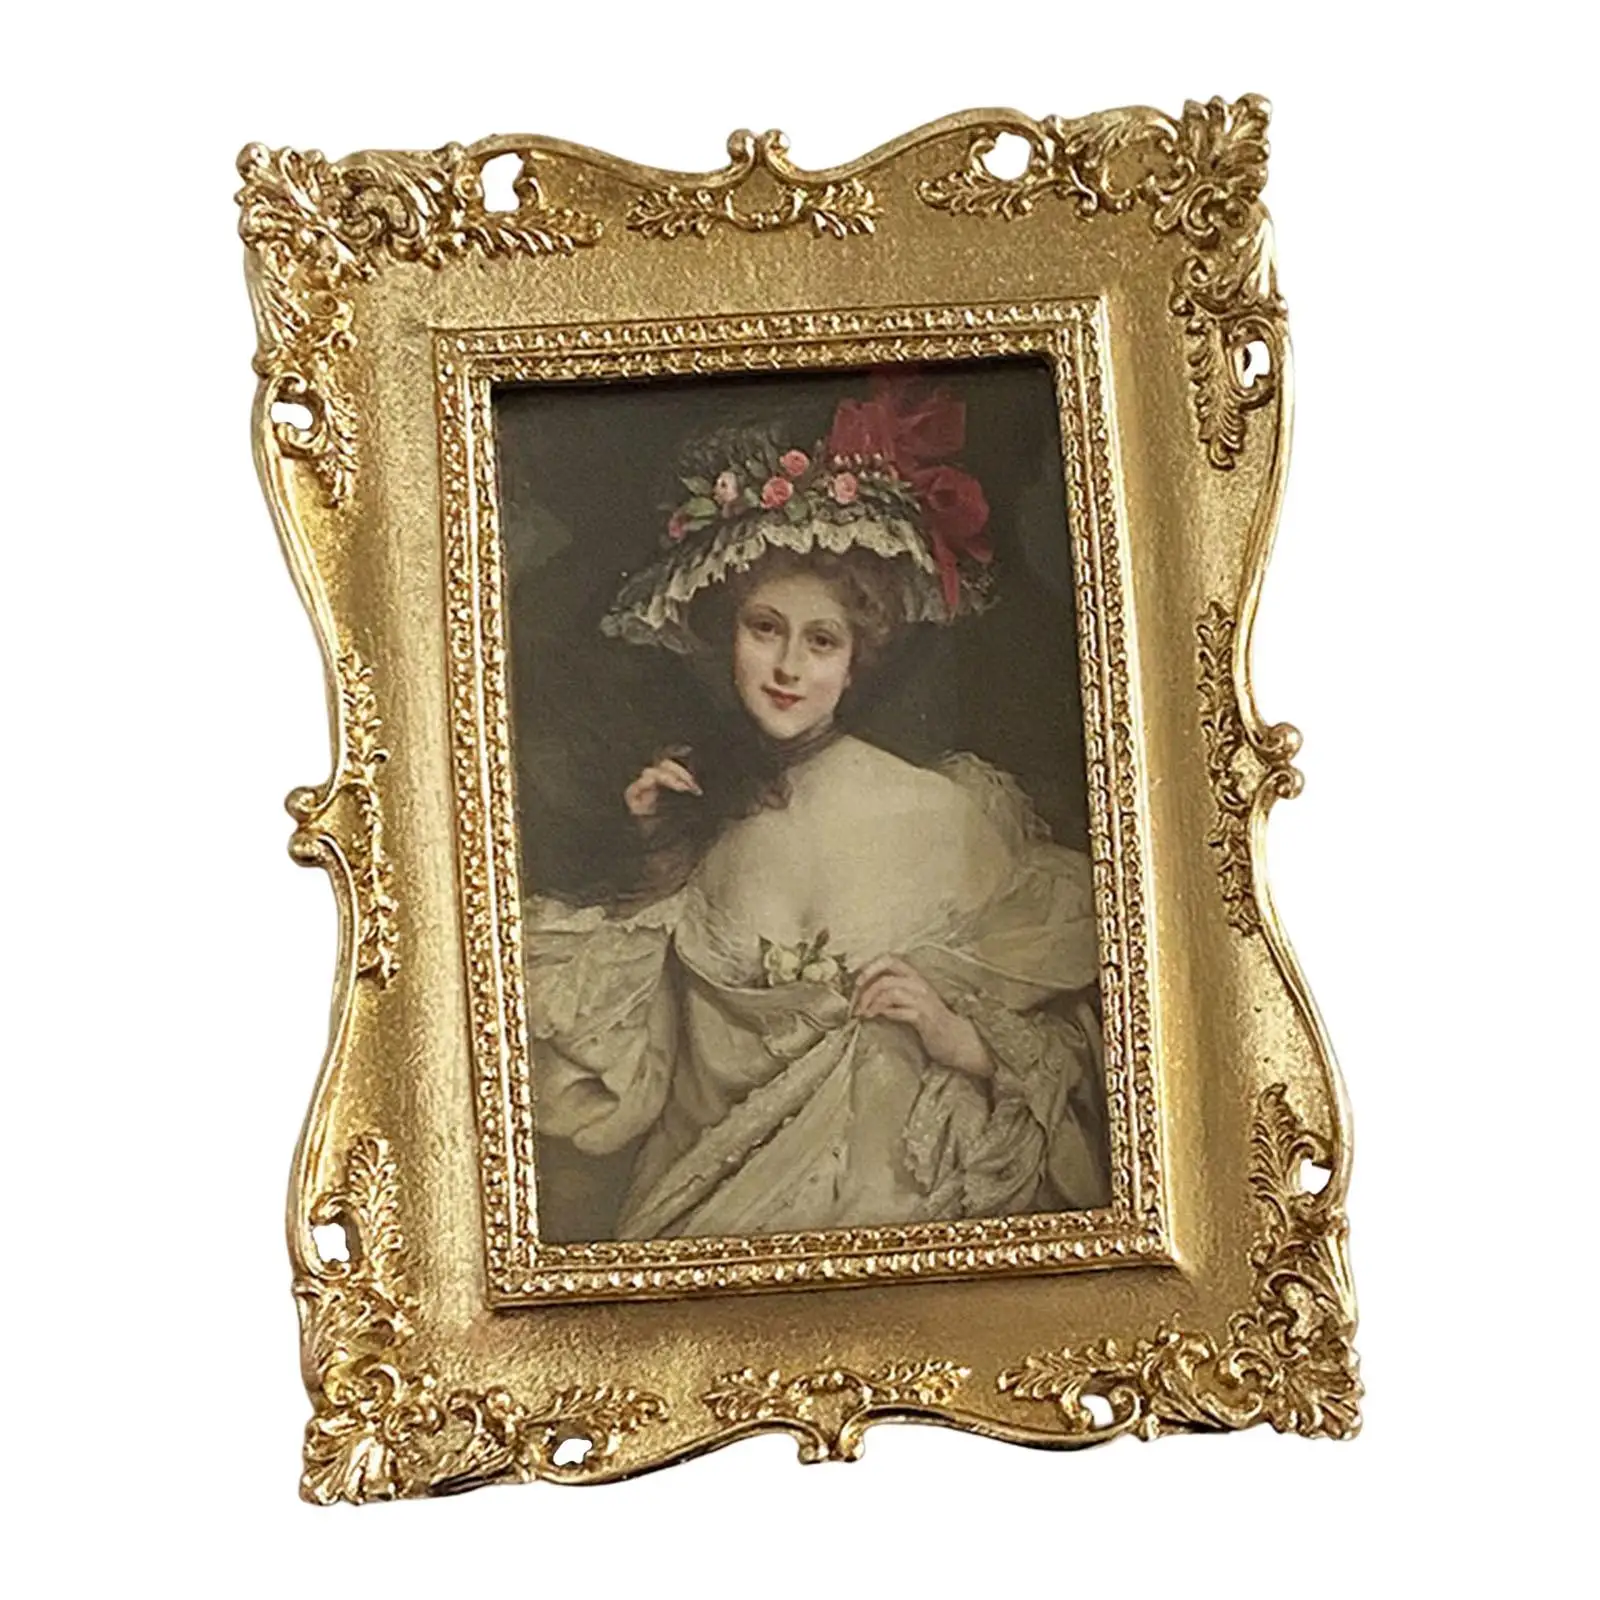 Vintage Style Resin Photo Frame Picture Holder Tabletop Hanging Embossed Frame Ornate for Living Room Hallway Holiday Decor Gift